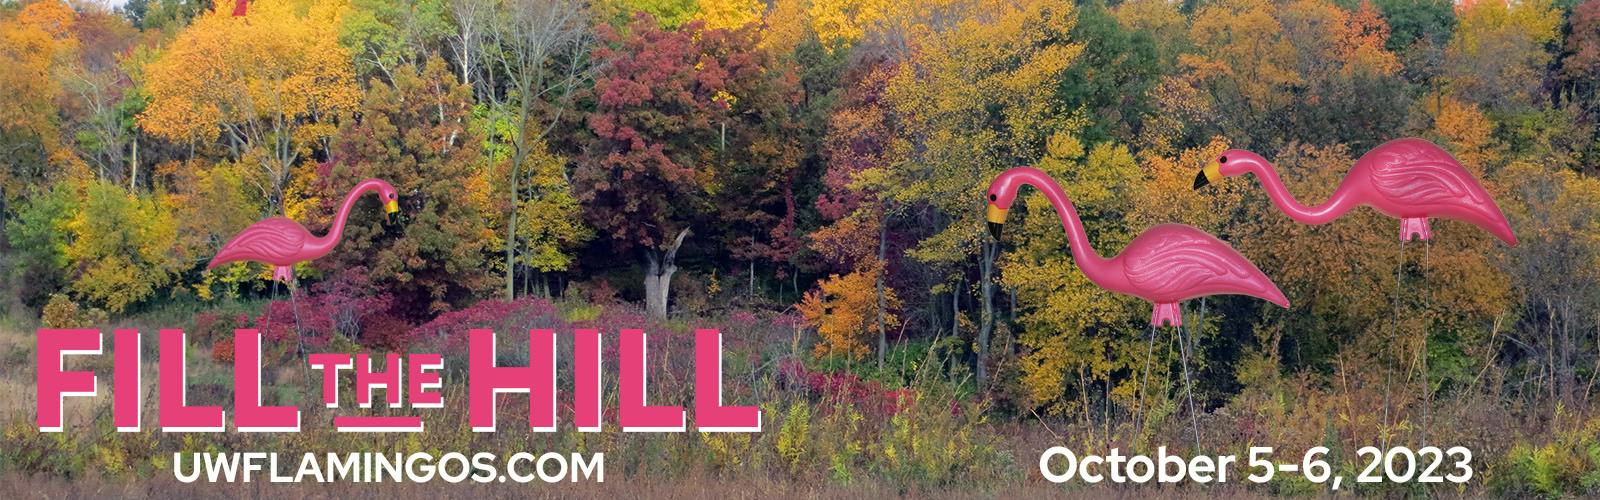 Fill the Hill October 5-6, 2023 uwflamingos.com